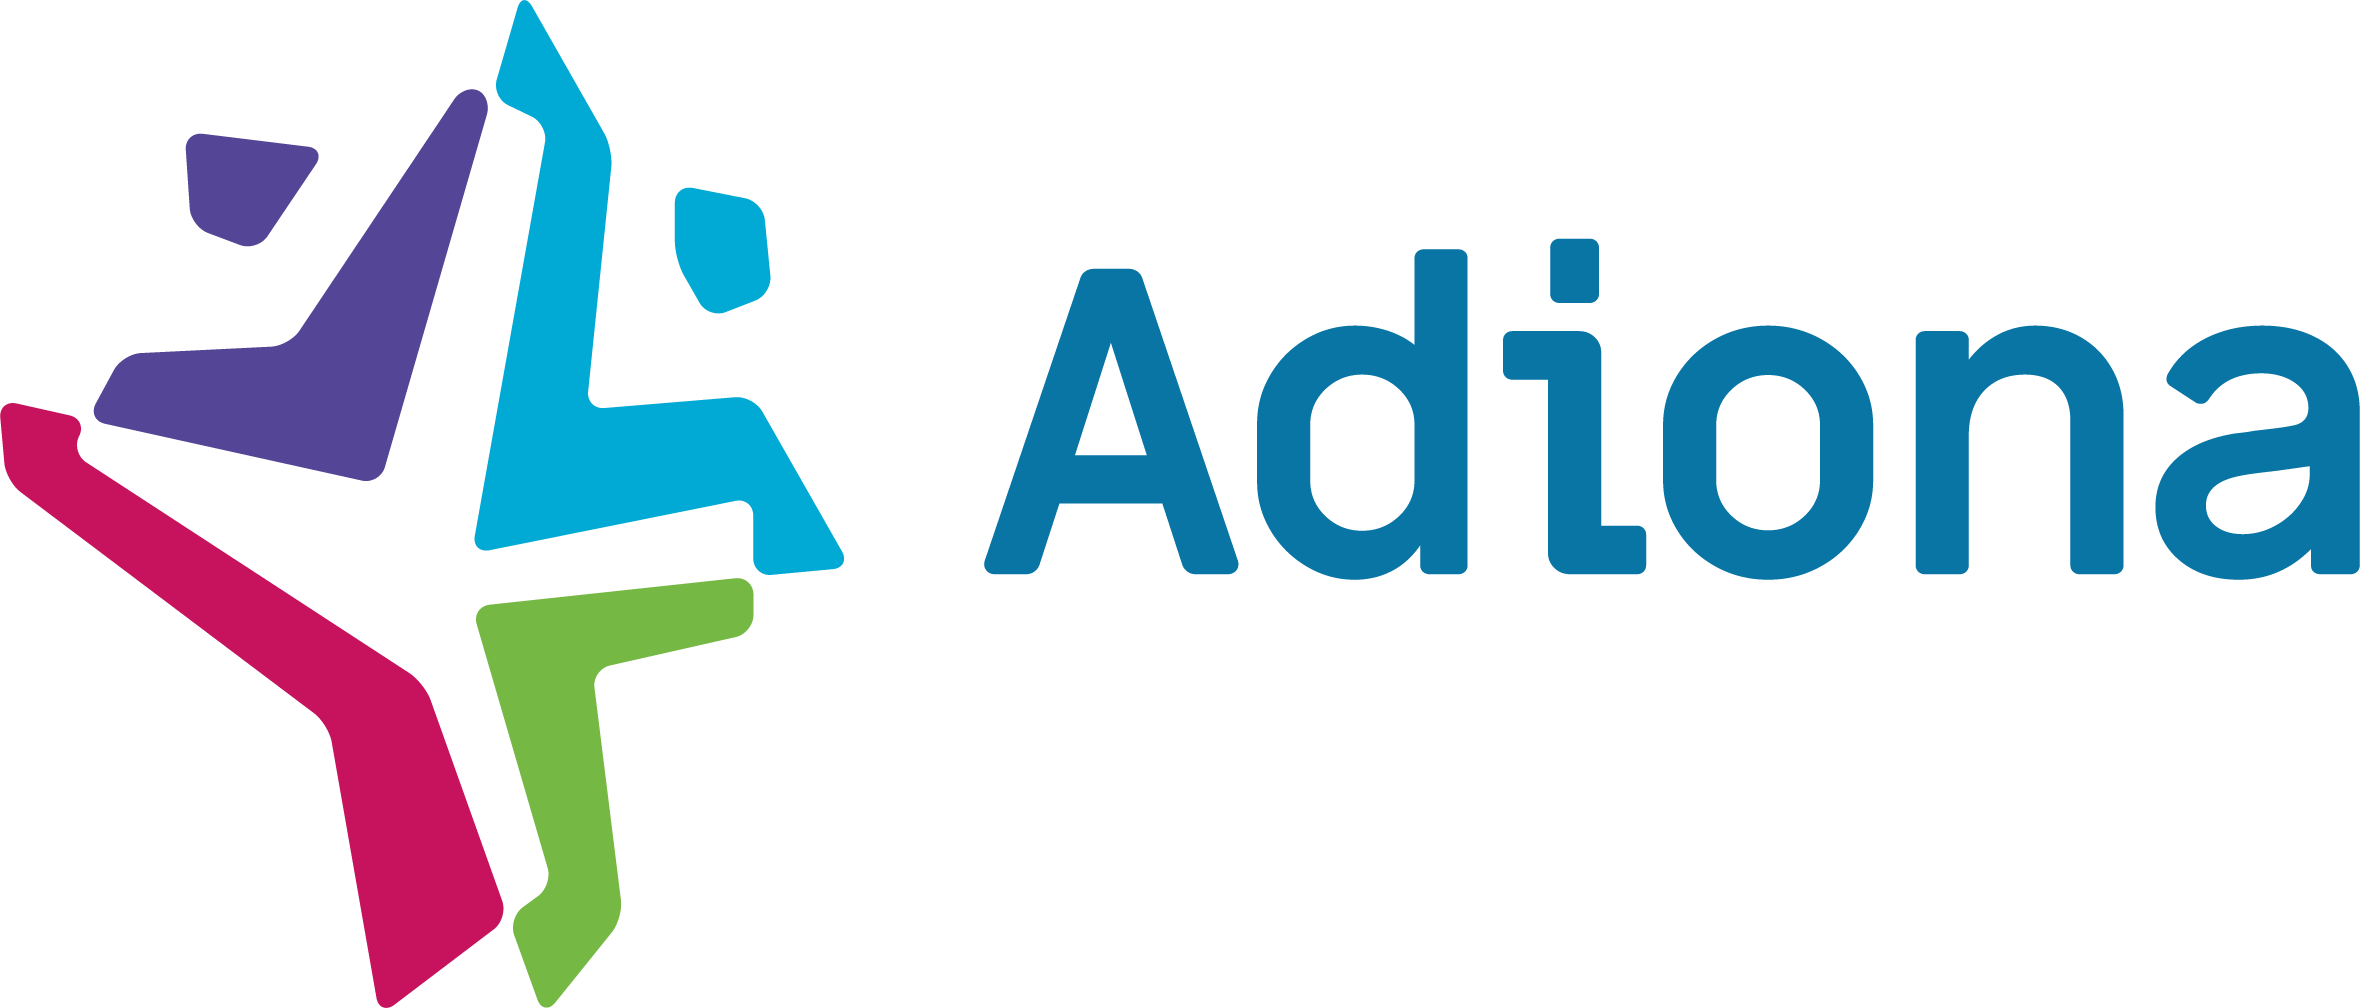 Logo Adiona